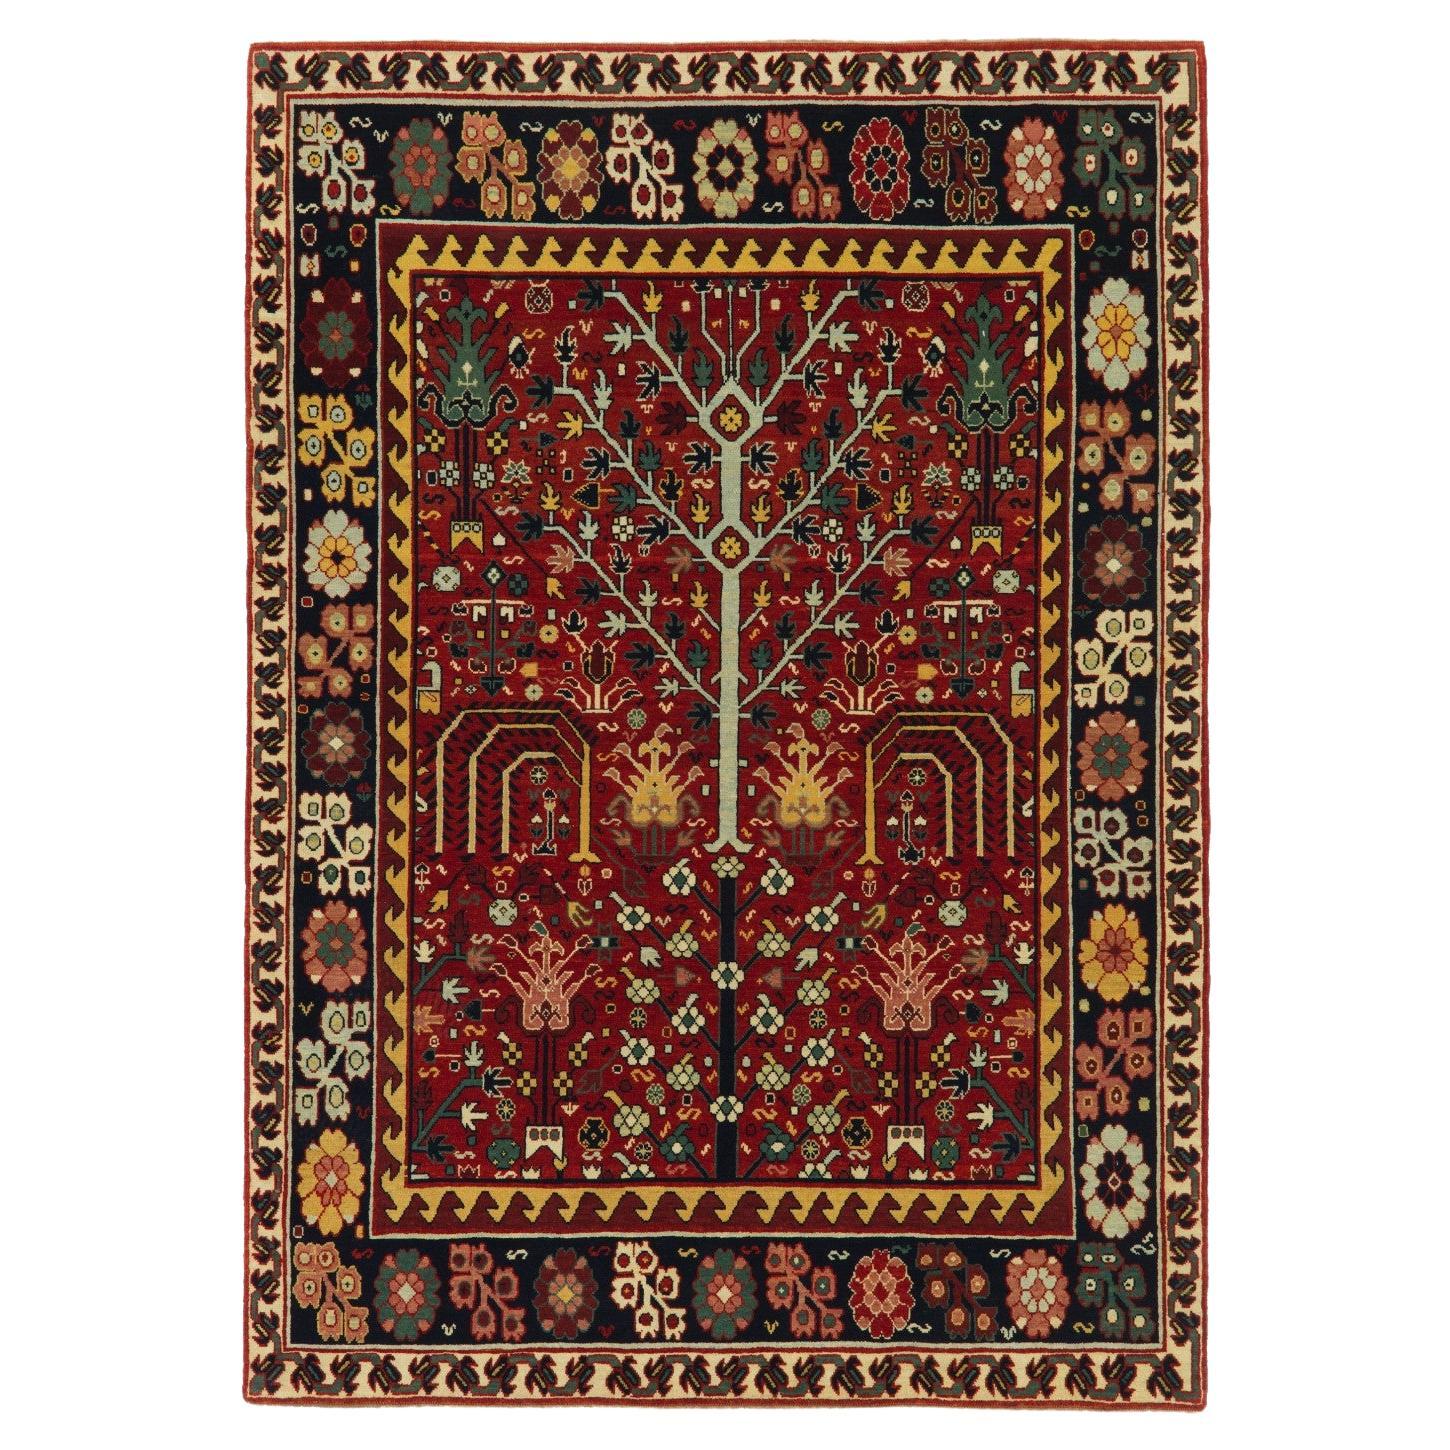 Ararat Rugs Bid Majnum on Red Field Rug, 17th C Revival Carpet, Natural Dyed